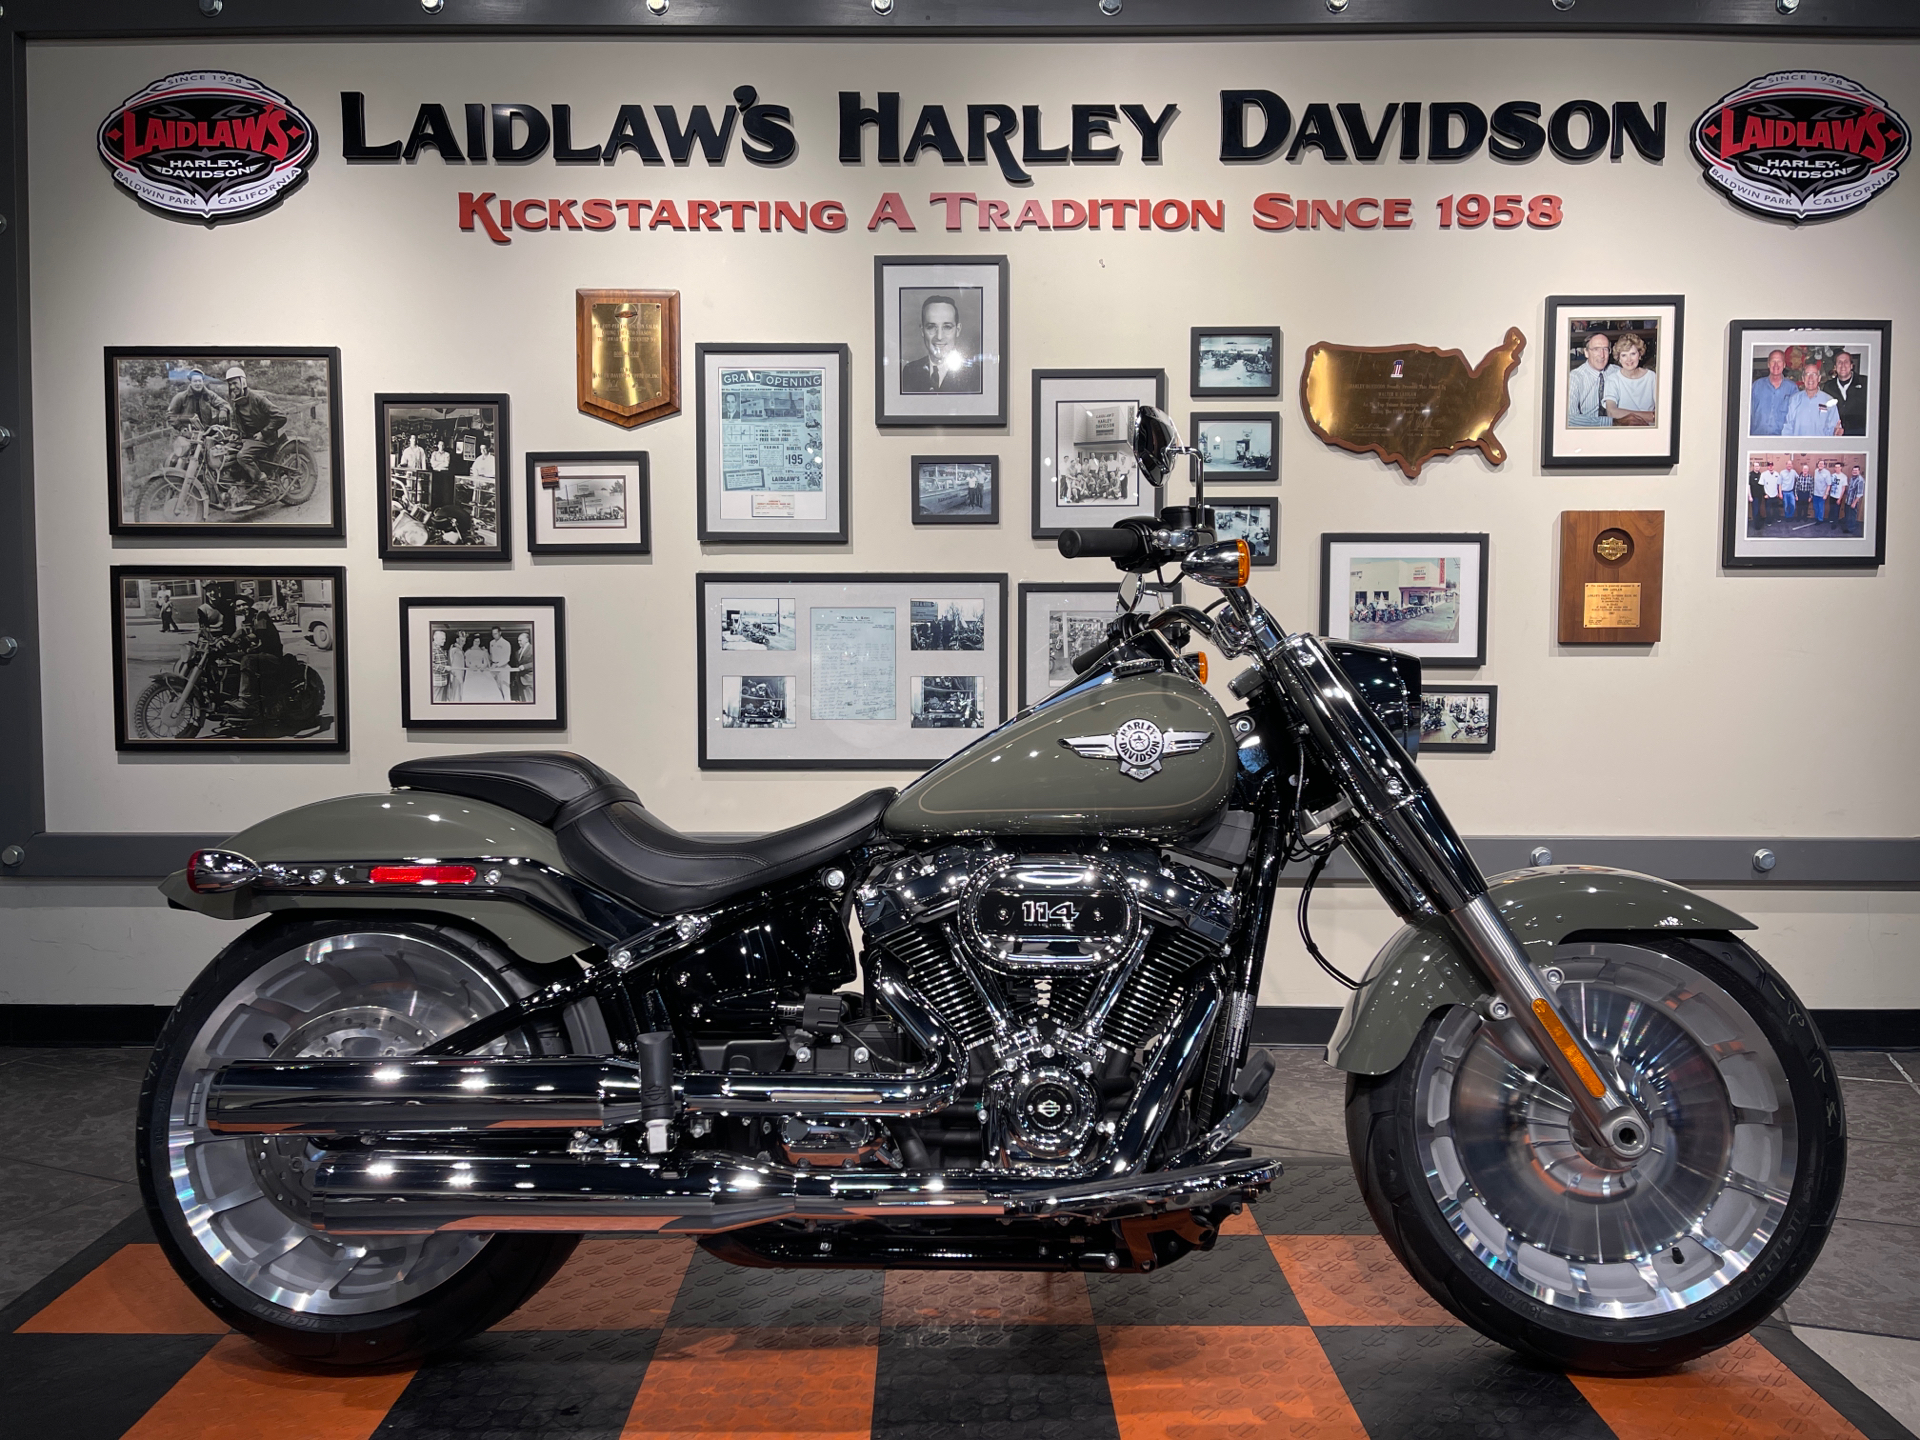 New 2021 Harley Davidson Fat Boy 114 Deadwood Green Baldwin Park Ca 29104